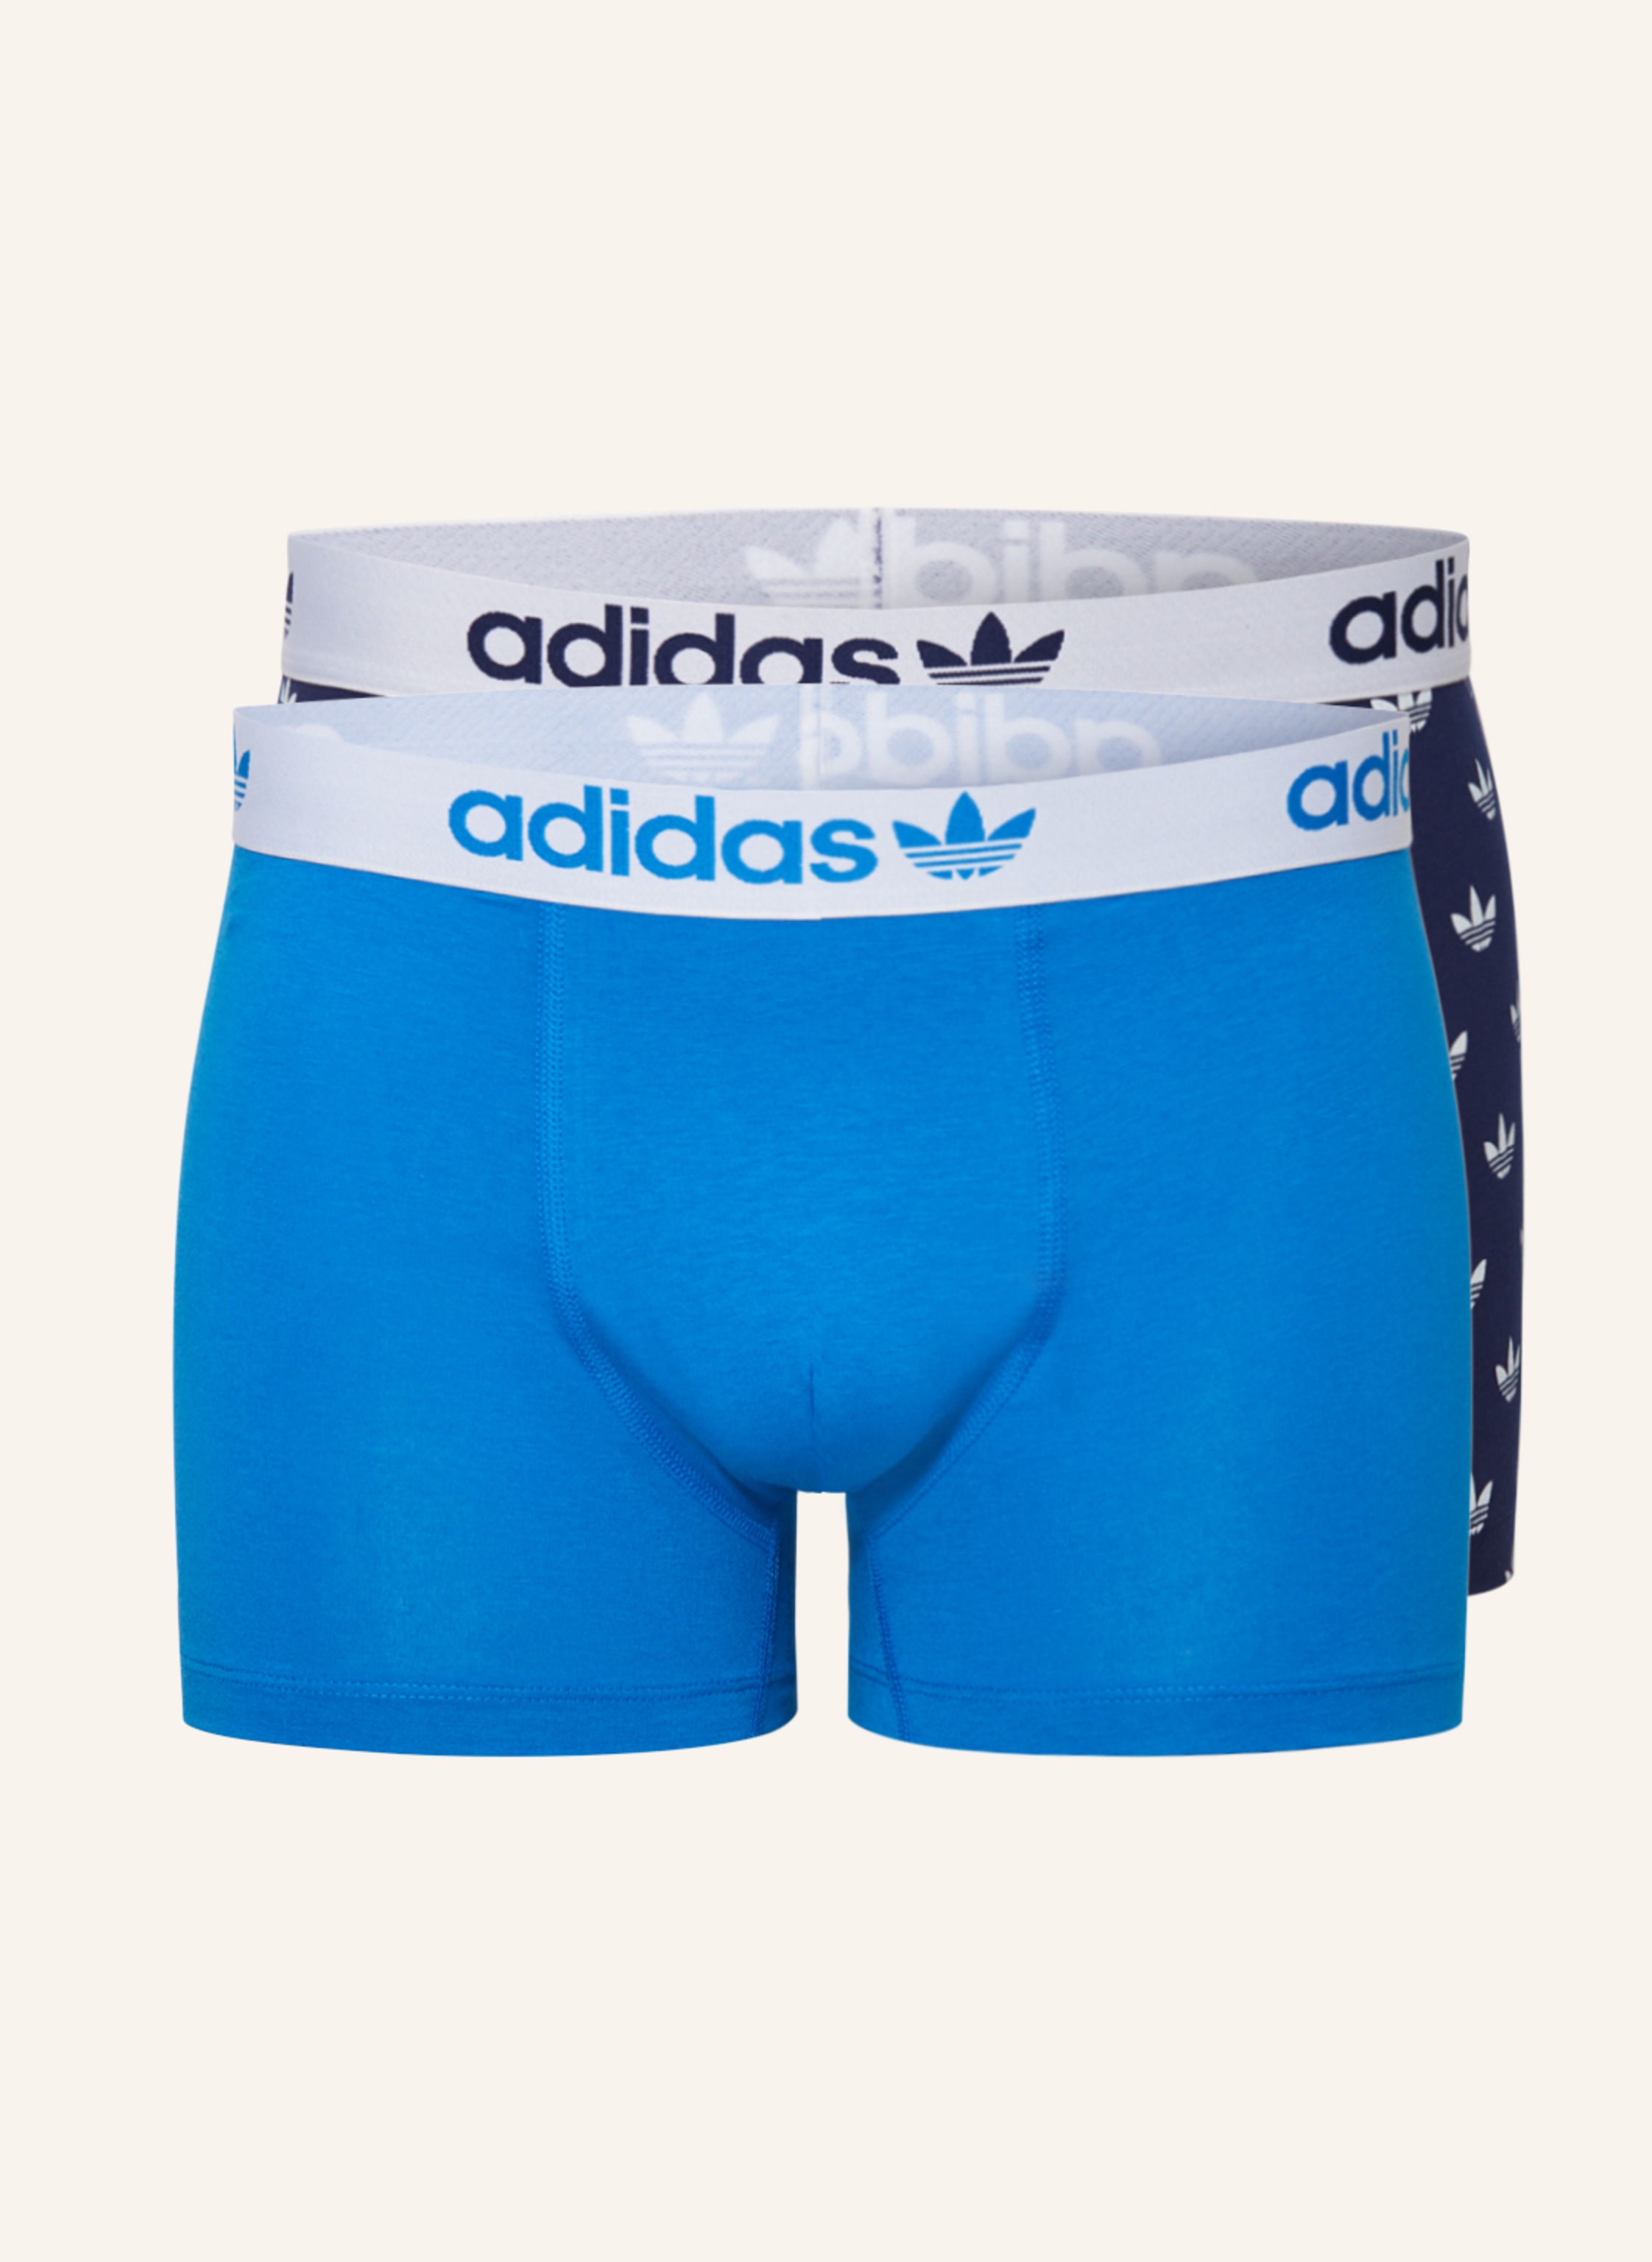 adidas Originals 2er-Pack Boxershorts in dunkelblau/ blau/ weiss